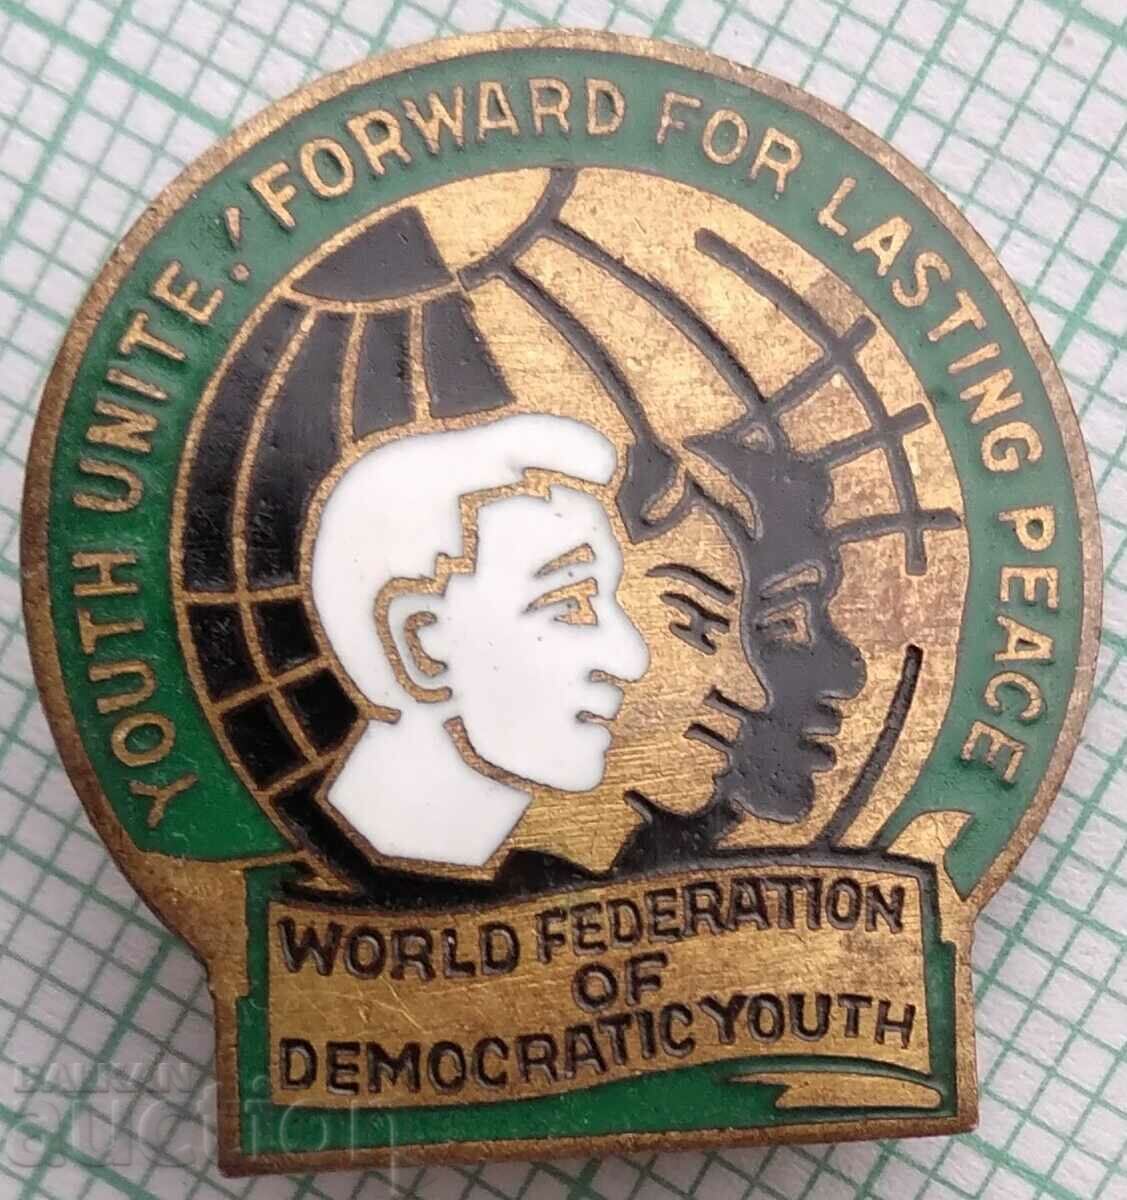 16314 WFDY Παγκόσμια Ομοσπονδία Δημοκρατικής Νεολαίας